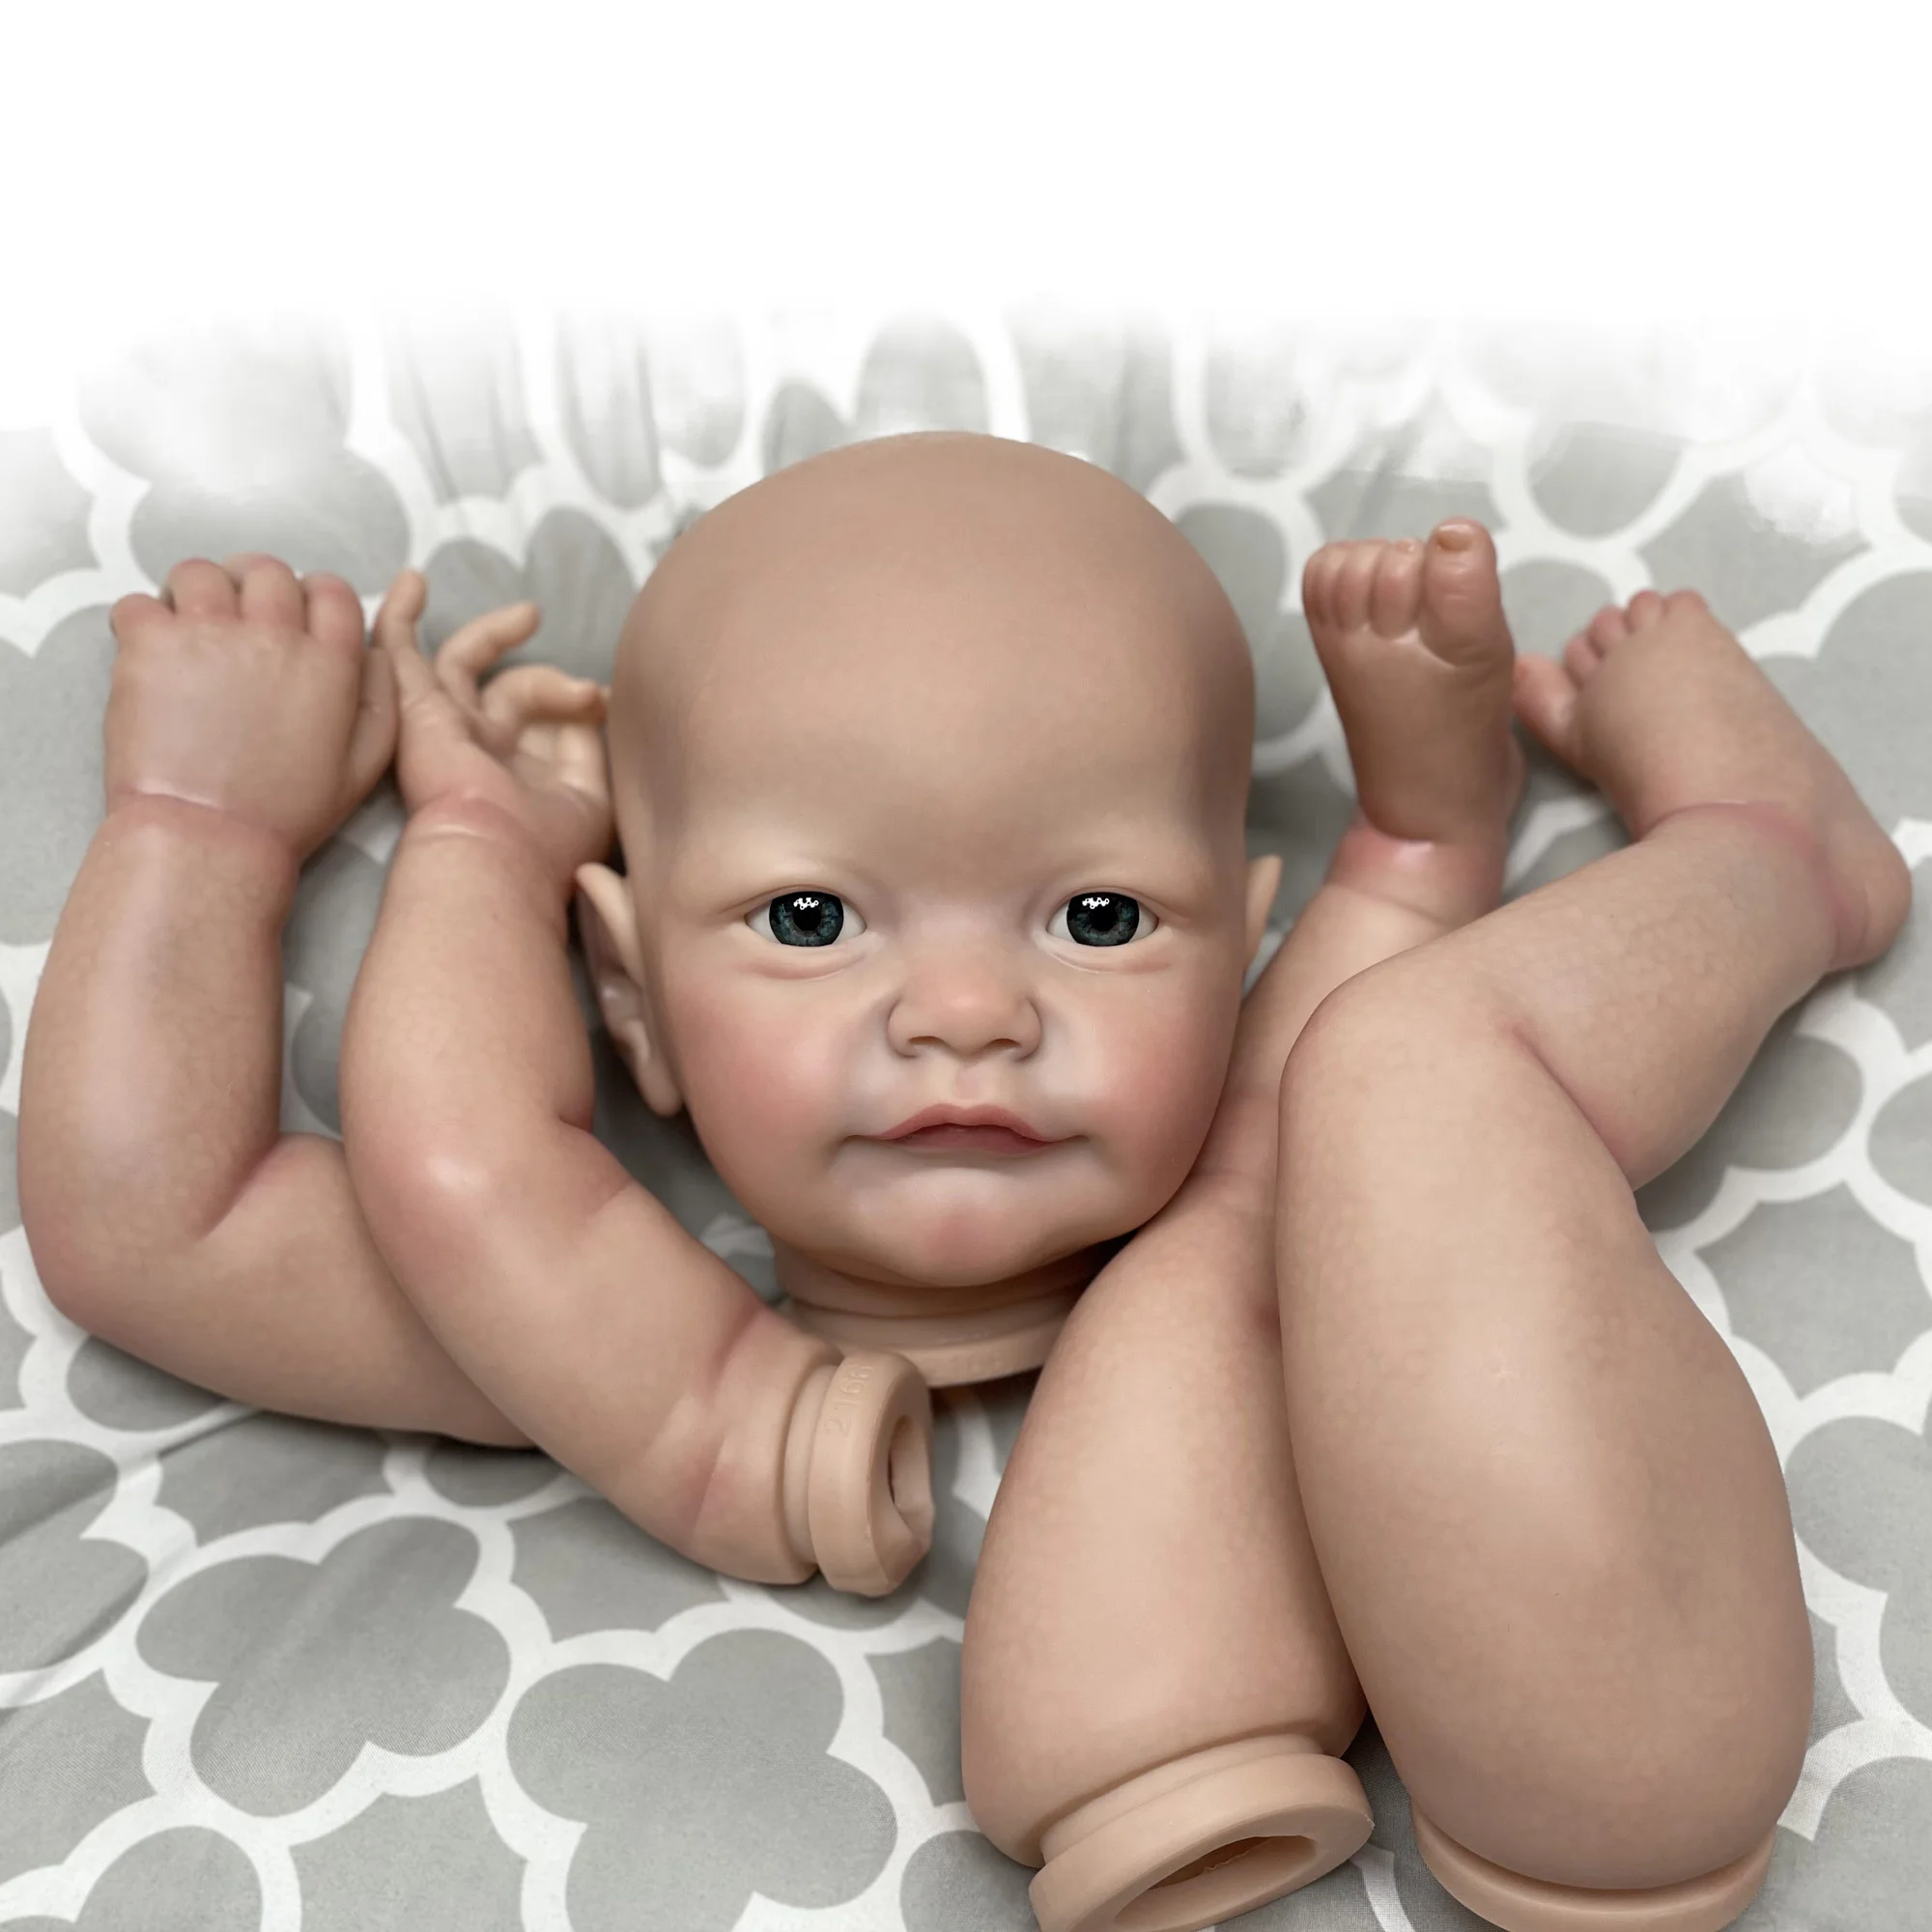 Hot Sale Boneca Bebe Reborn Комплекти Lifelike Newborn Собственоръчно Reborn Кукла Kit Include Body And Eyes бебето бон кукла оригинал 2